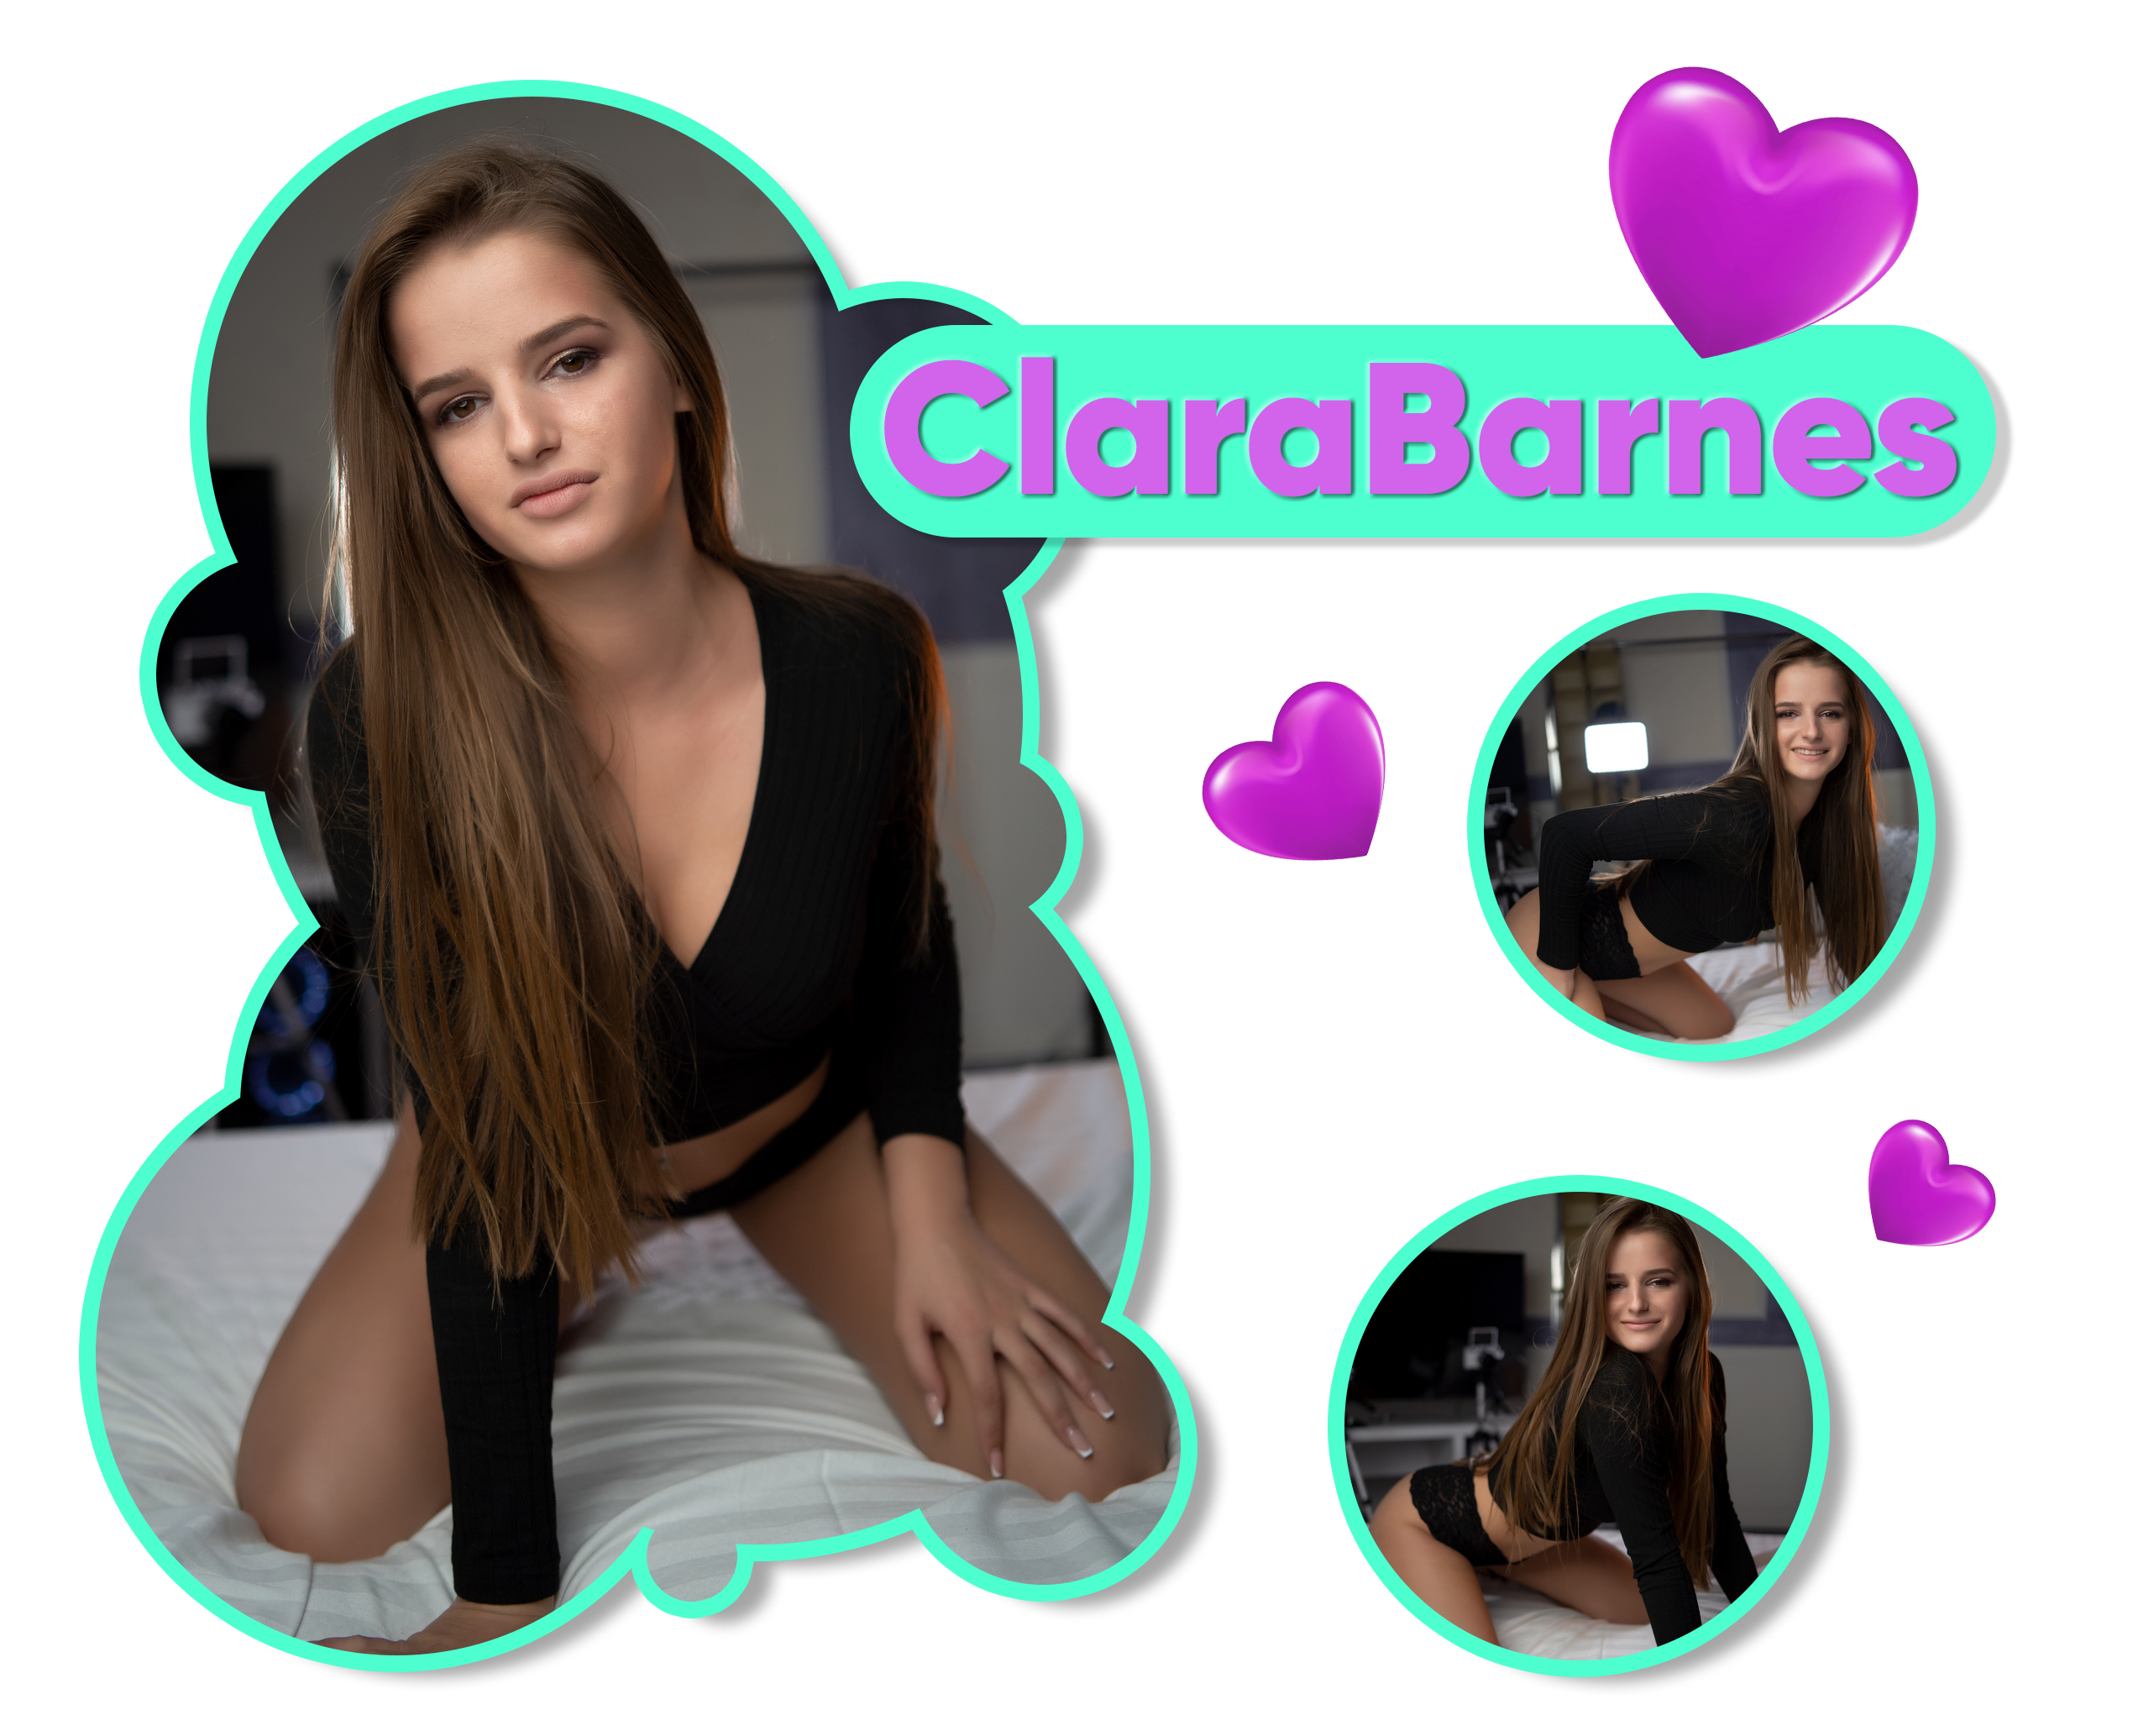 ClaraBarnes Love me! image: 1